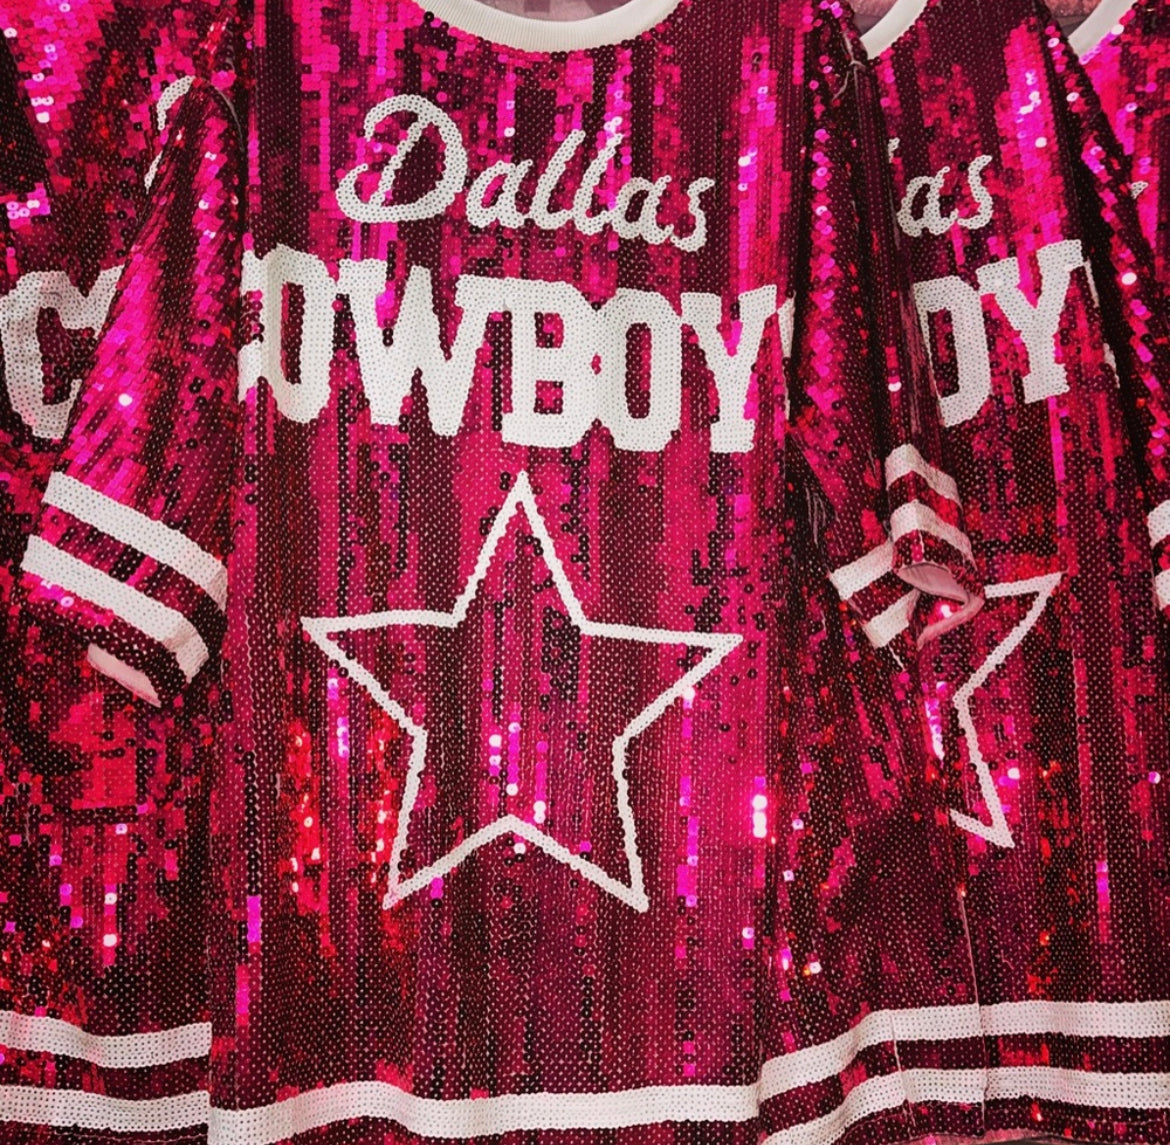 Dallas Cowboys Pink Sequin Dress